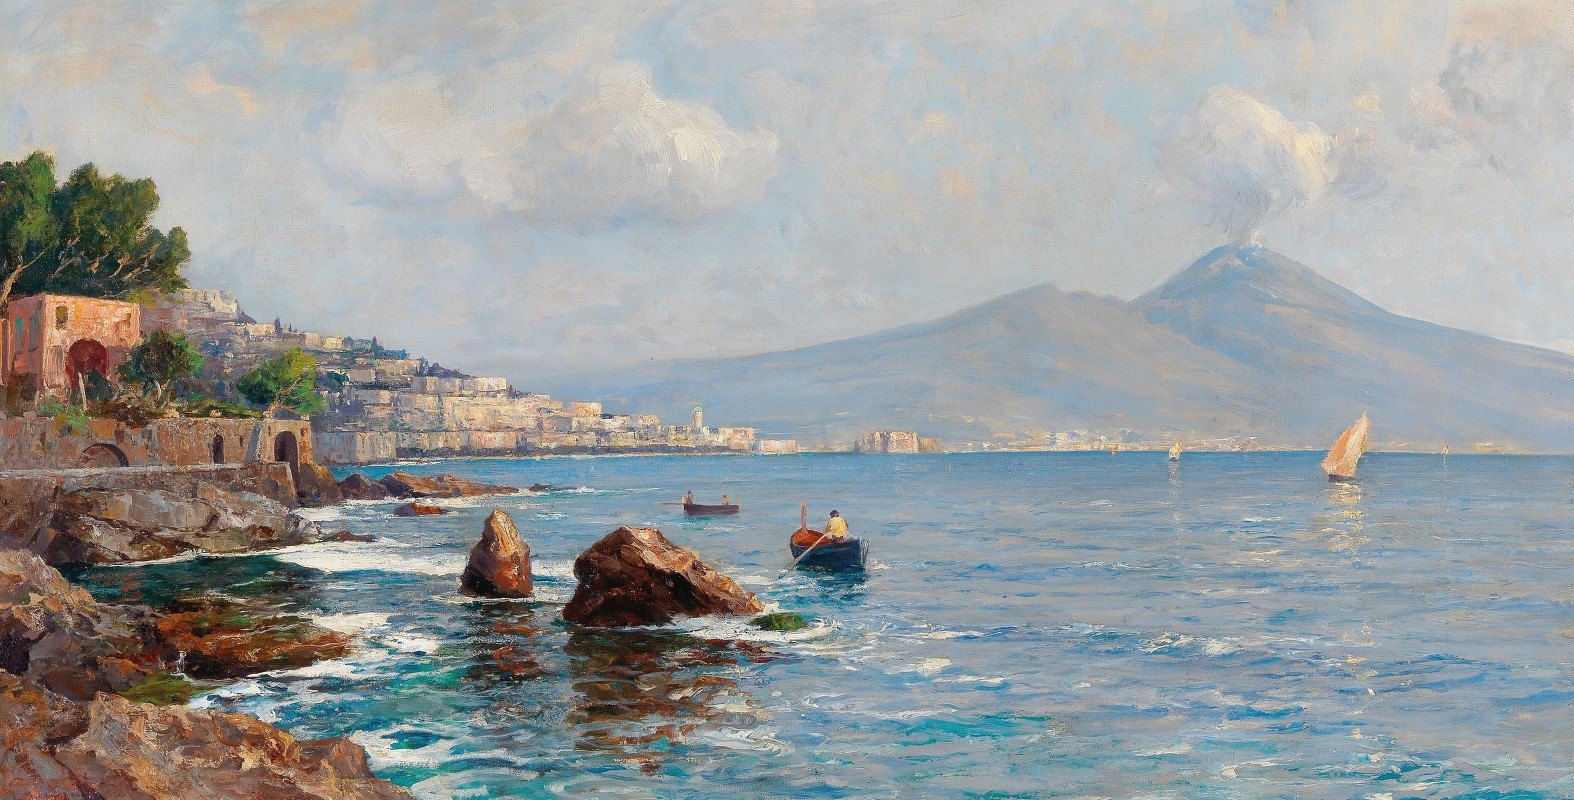 以维苏威火山为背景的那不勒斯湾景观`View of the Gulf of Naples with Vesuvius in the background